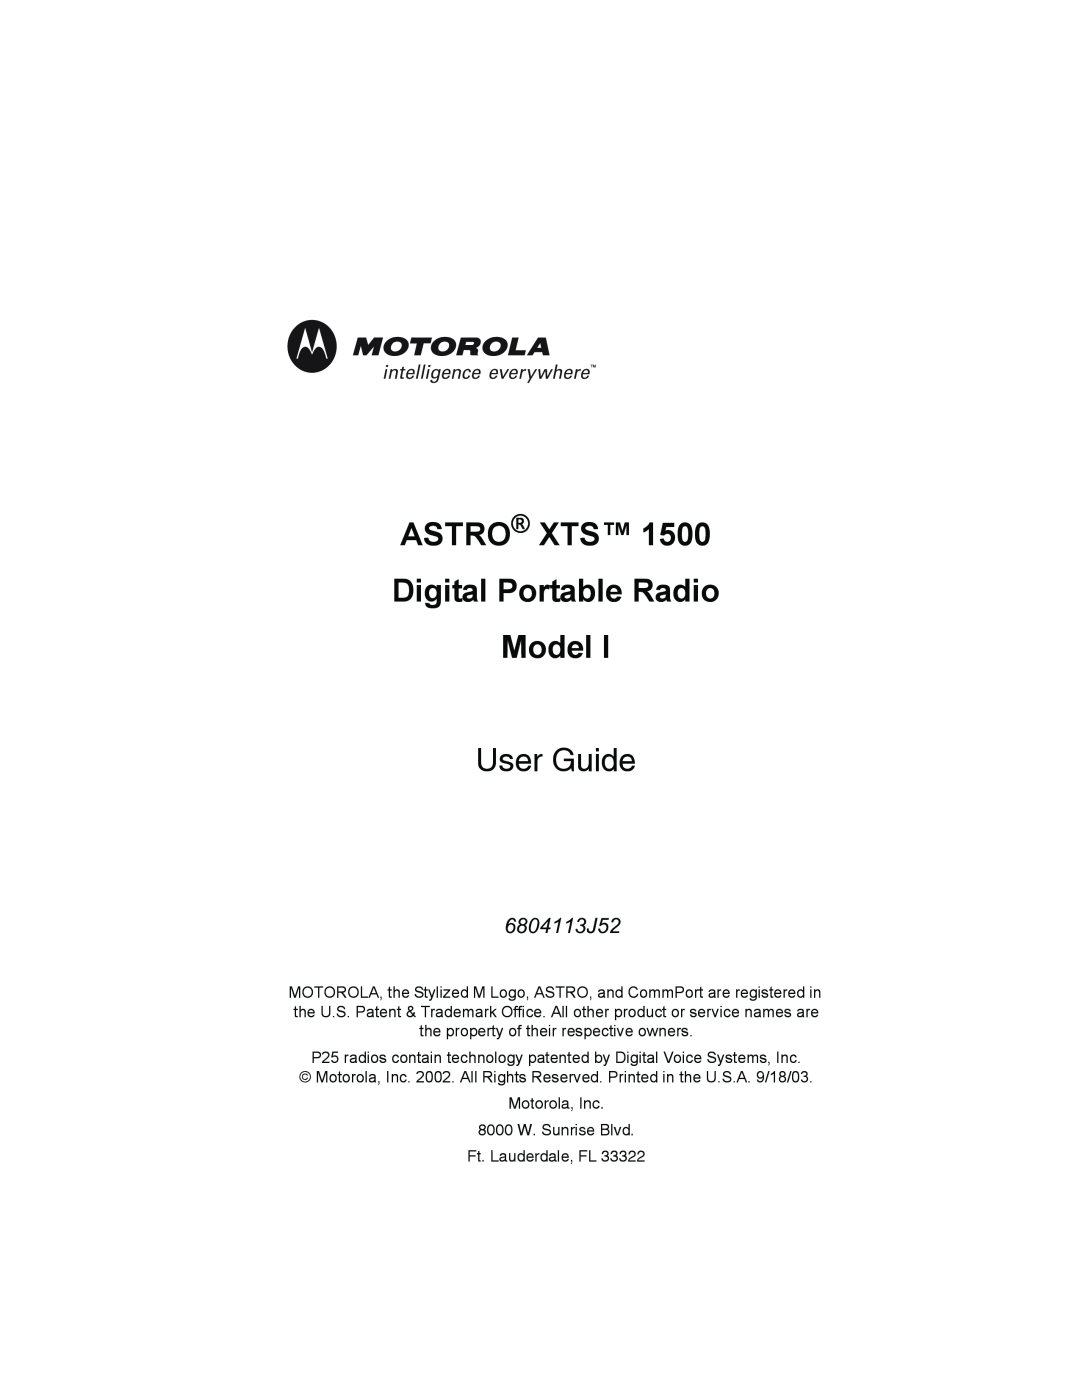 Motorola XTSTM 1500 manual ASTRO XTS Digital Portable Radio Model, User Guide, 6804113J52 